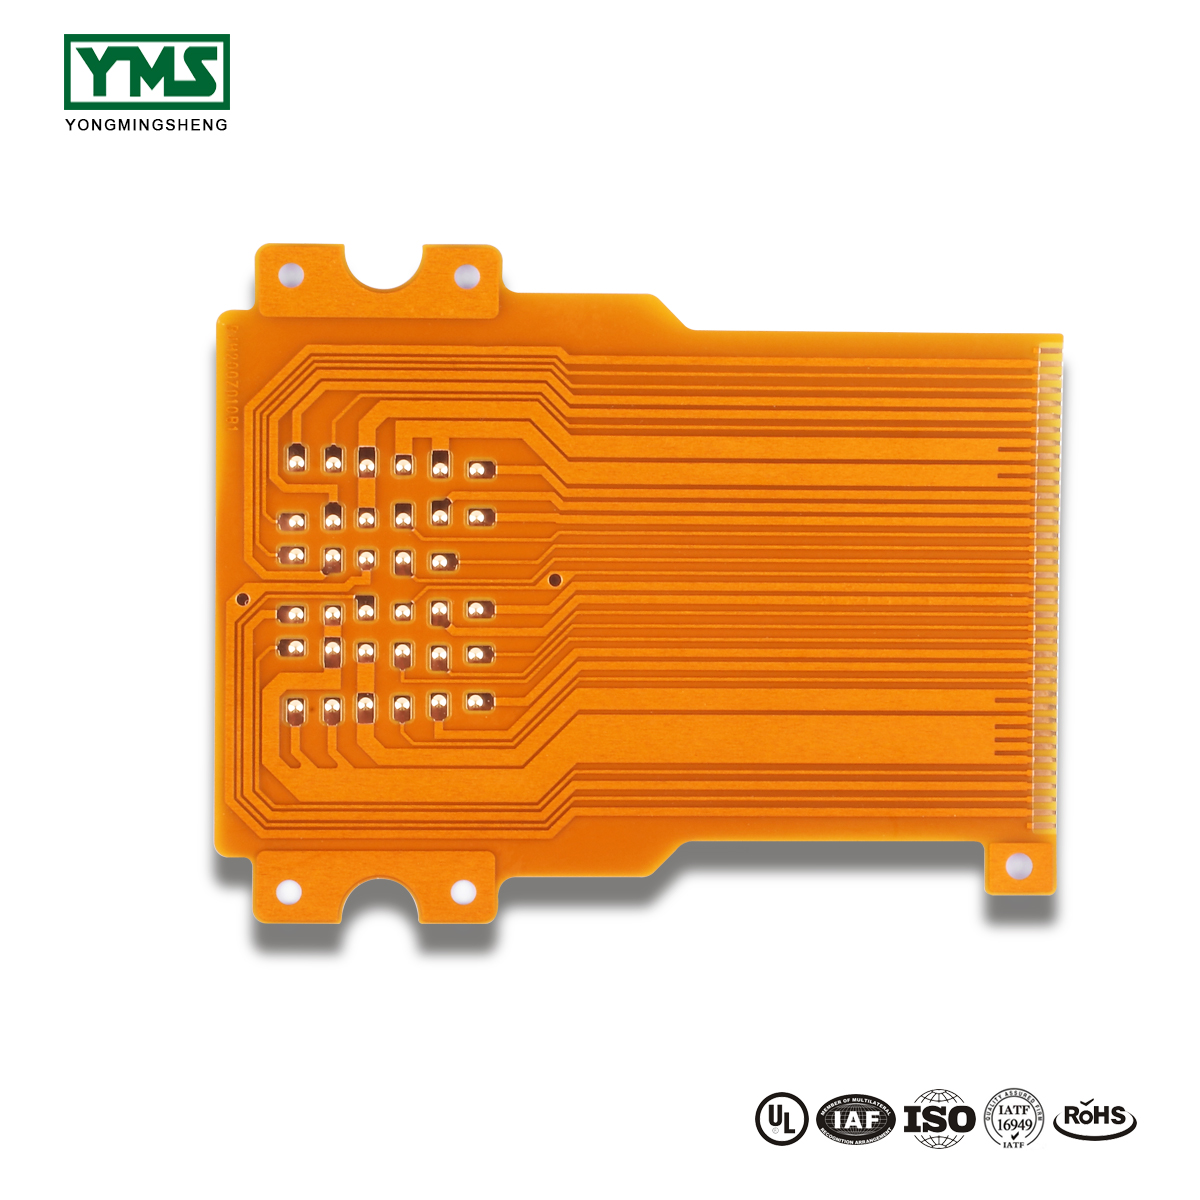 Cheap price 1800 Ceramic Fiber Board - 1Layer Raised Point flexible Board | YMSPCB – Yongmingsheng